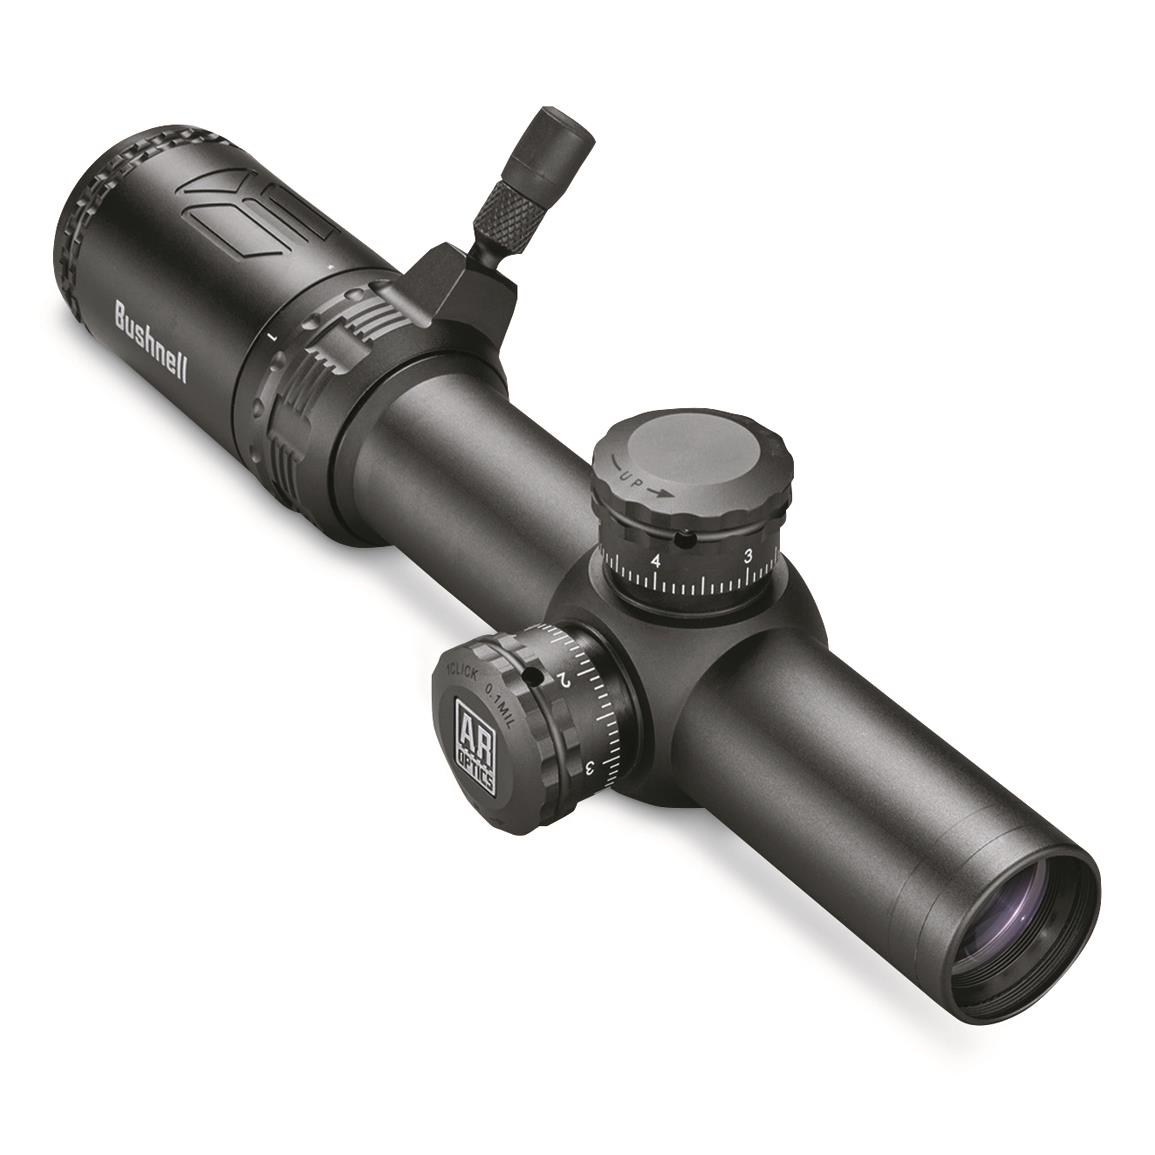 Bushnell AR Optics 1-4x24mm Rifle Scope, 30mm Tube, Drop Zone-223 (SFP) Reticle